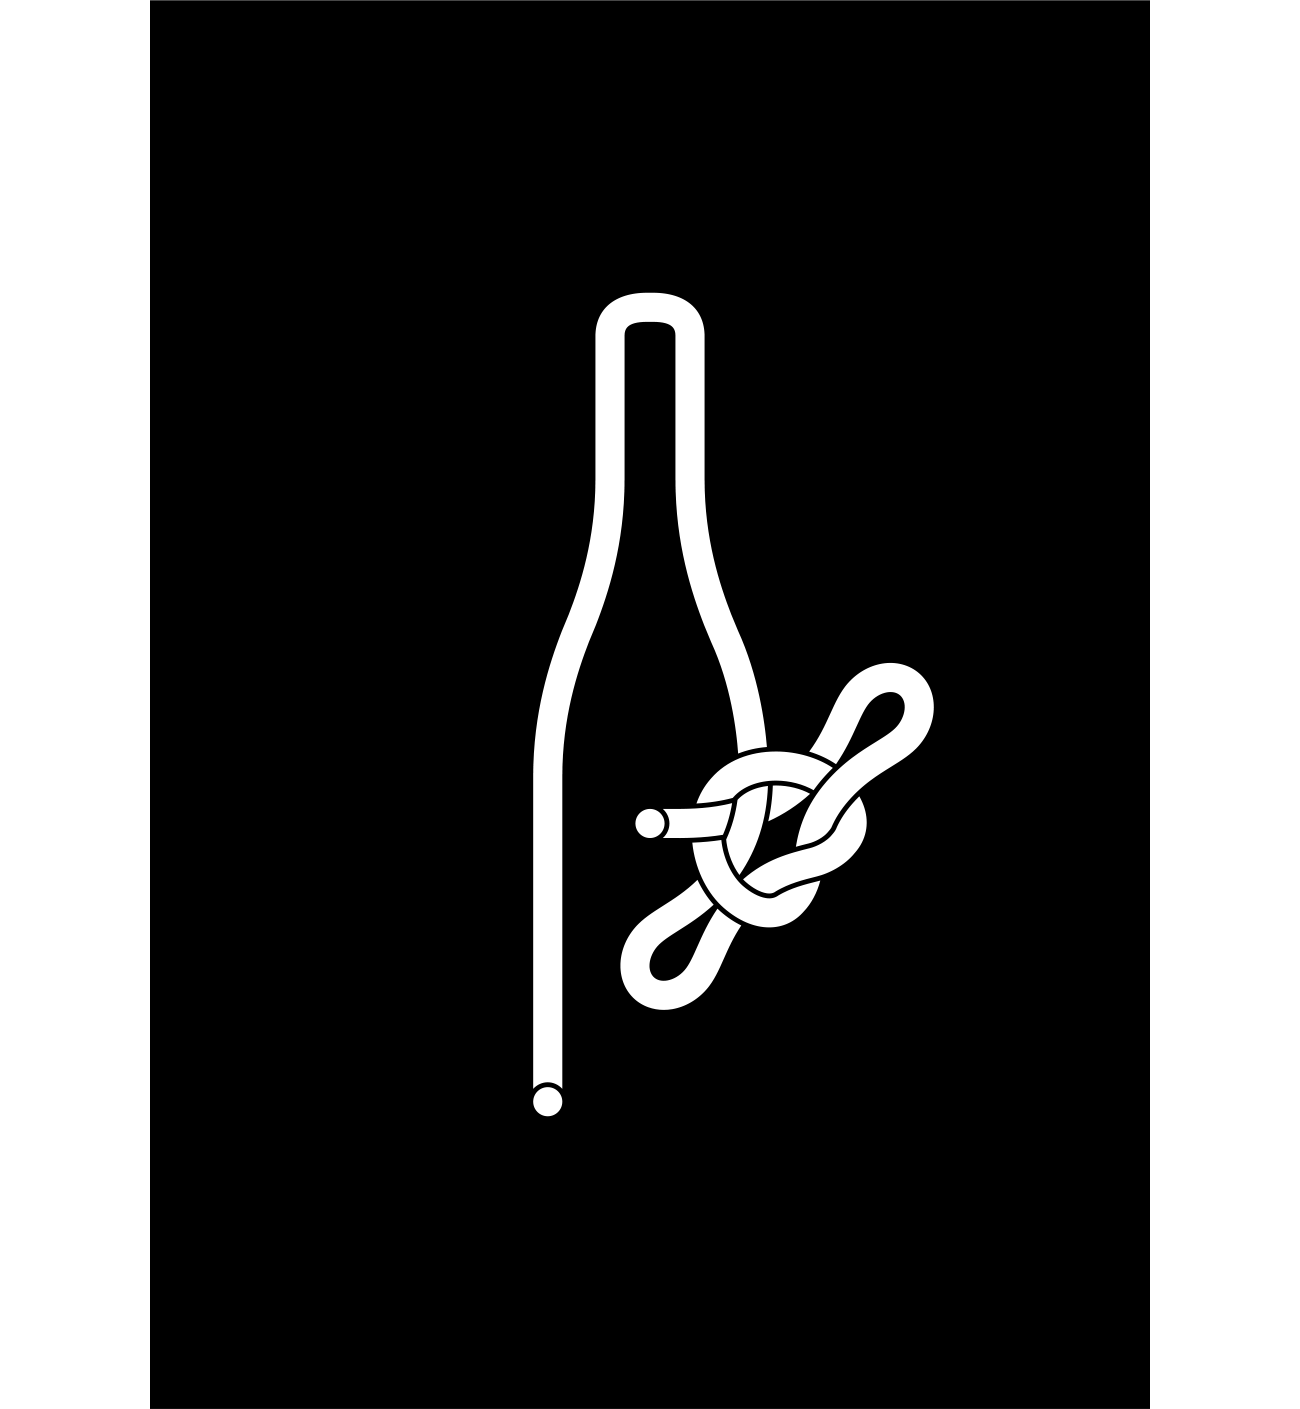 lost-art-loose-ends-natural-wine-branding-identity-logo-design-chris-hopkins